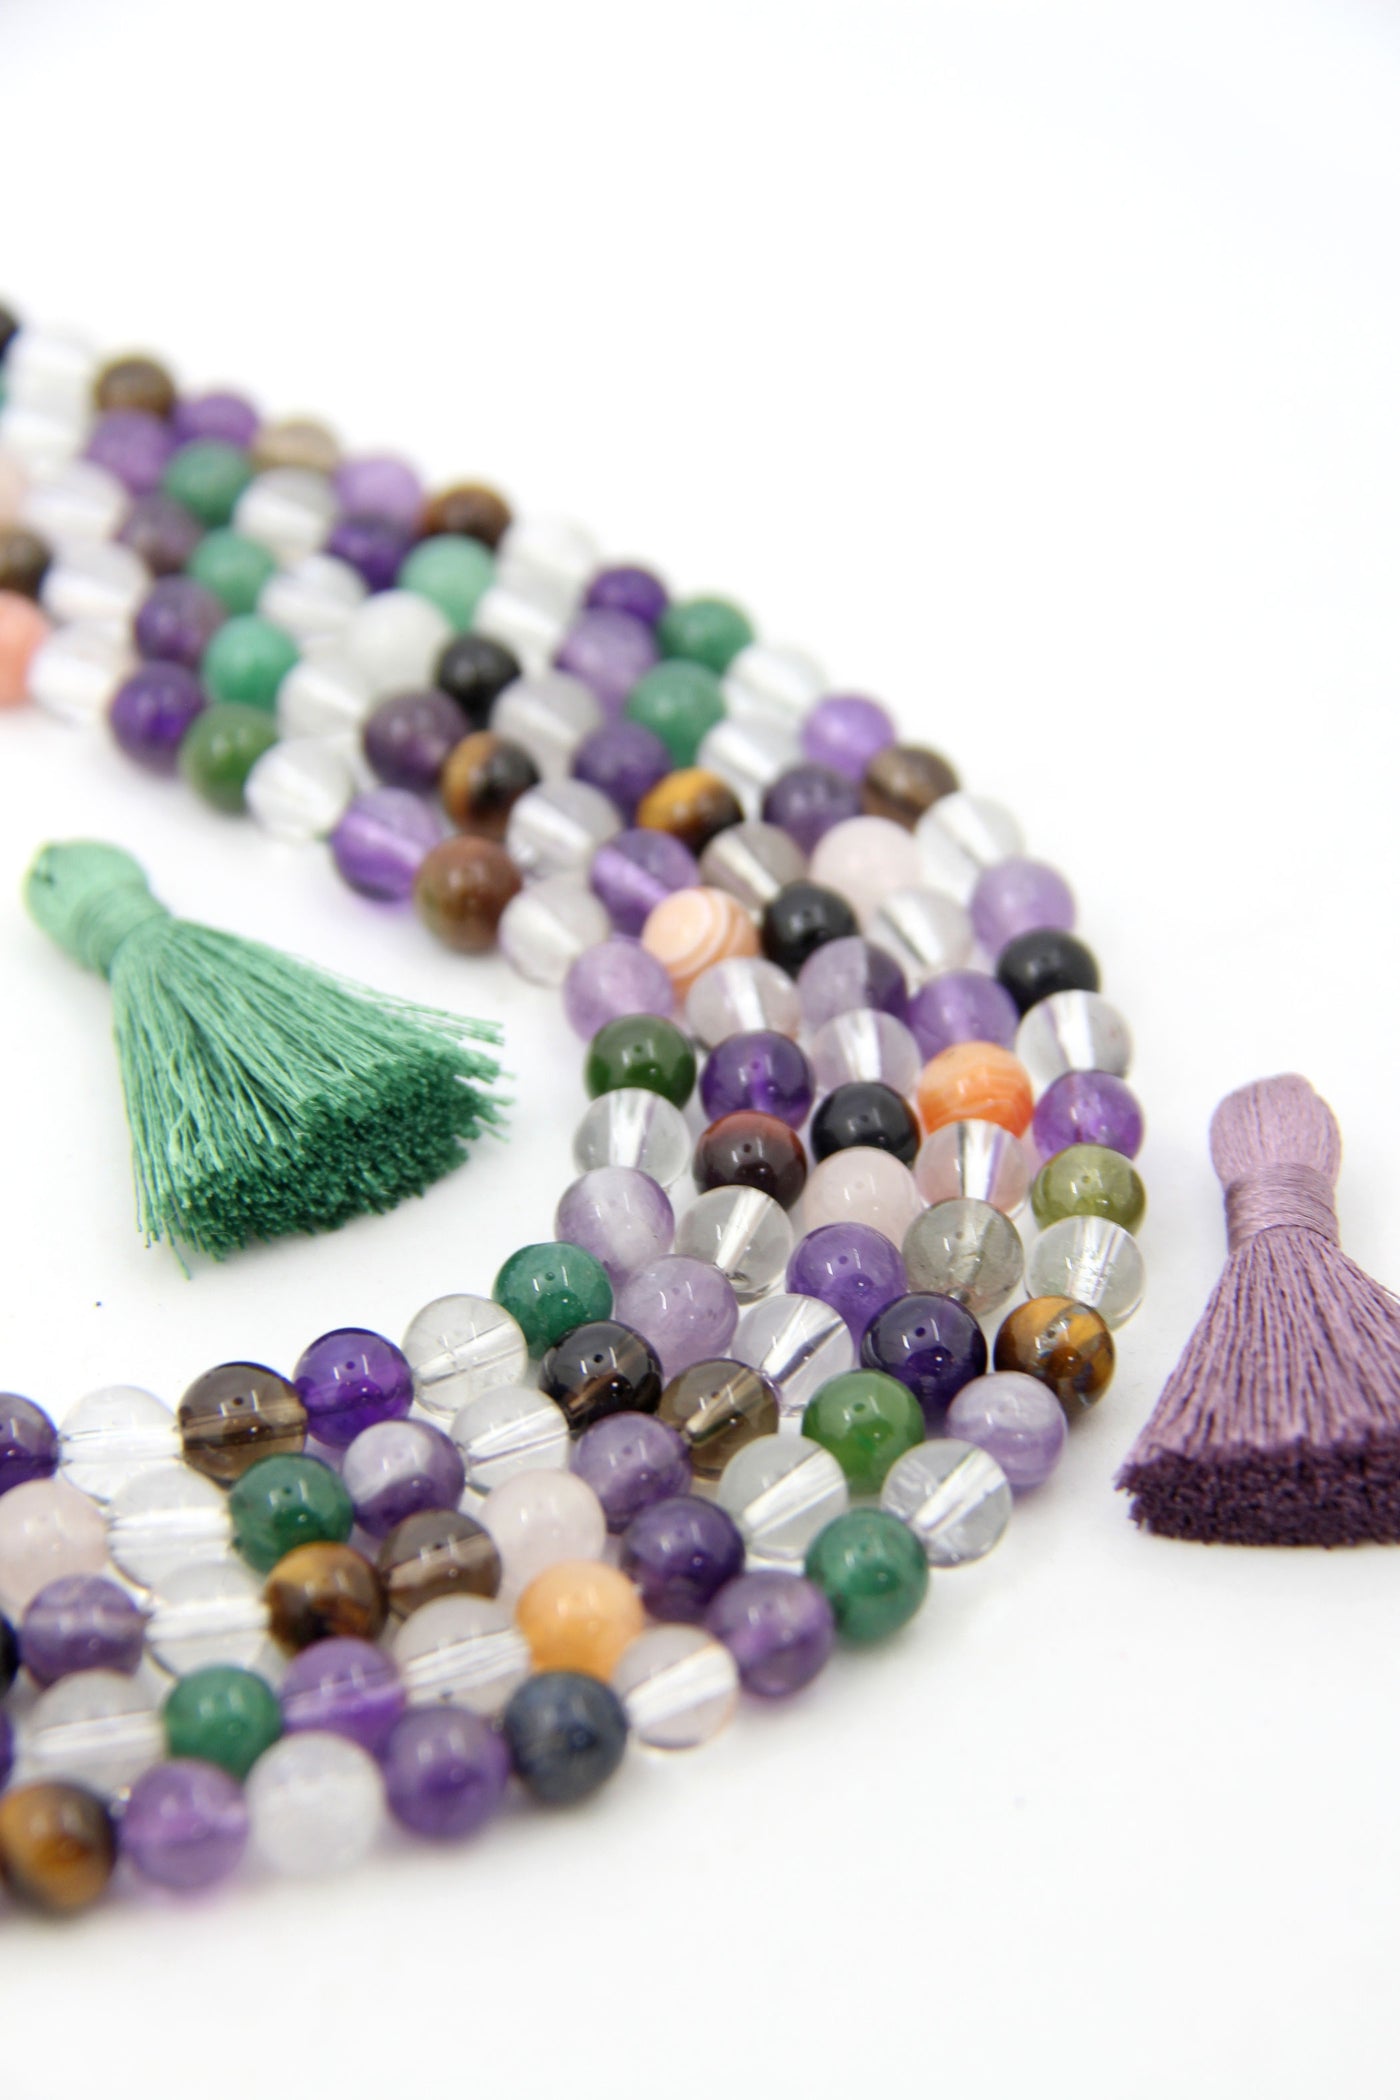 7mm Assorted Round Gemstone Beads, Multicolor Semiprecious Beads